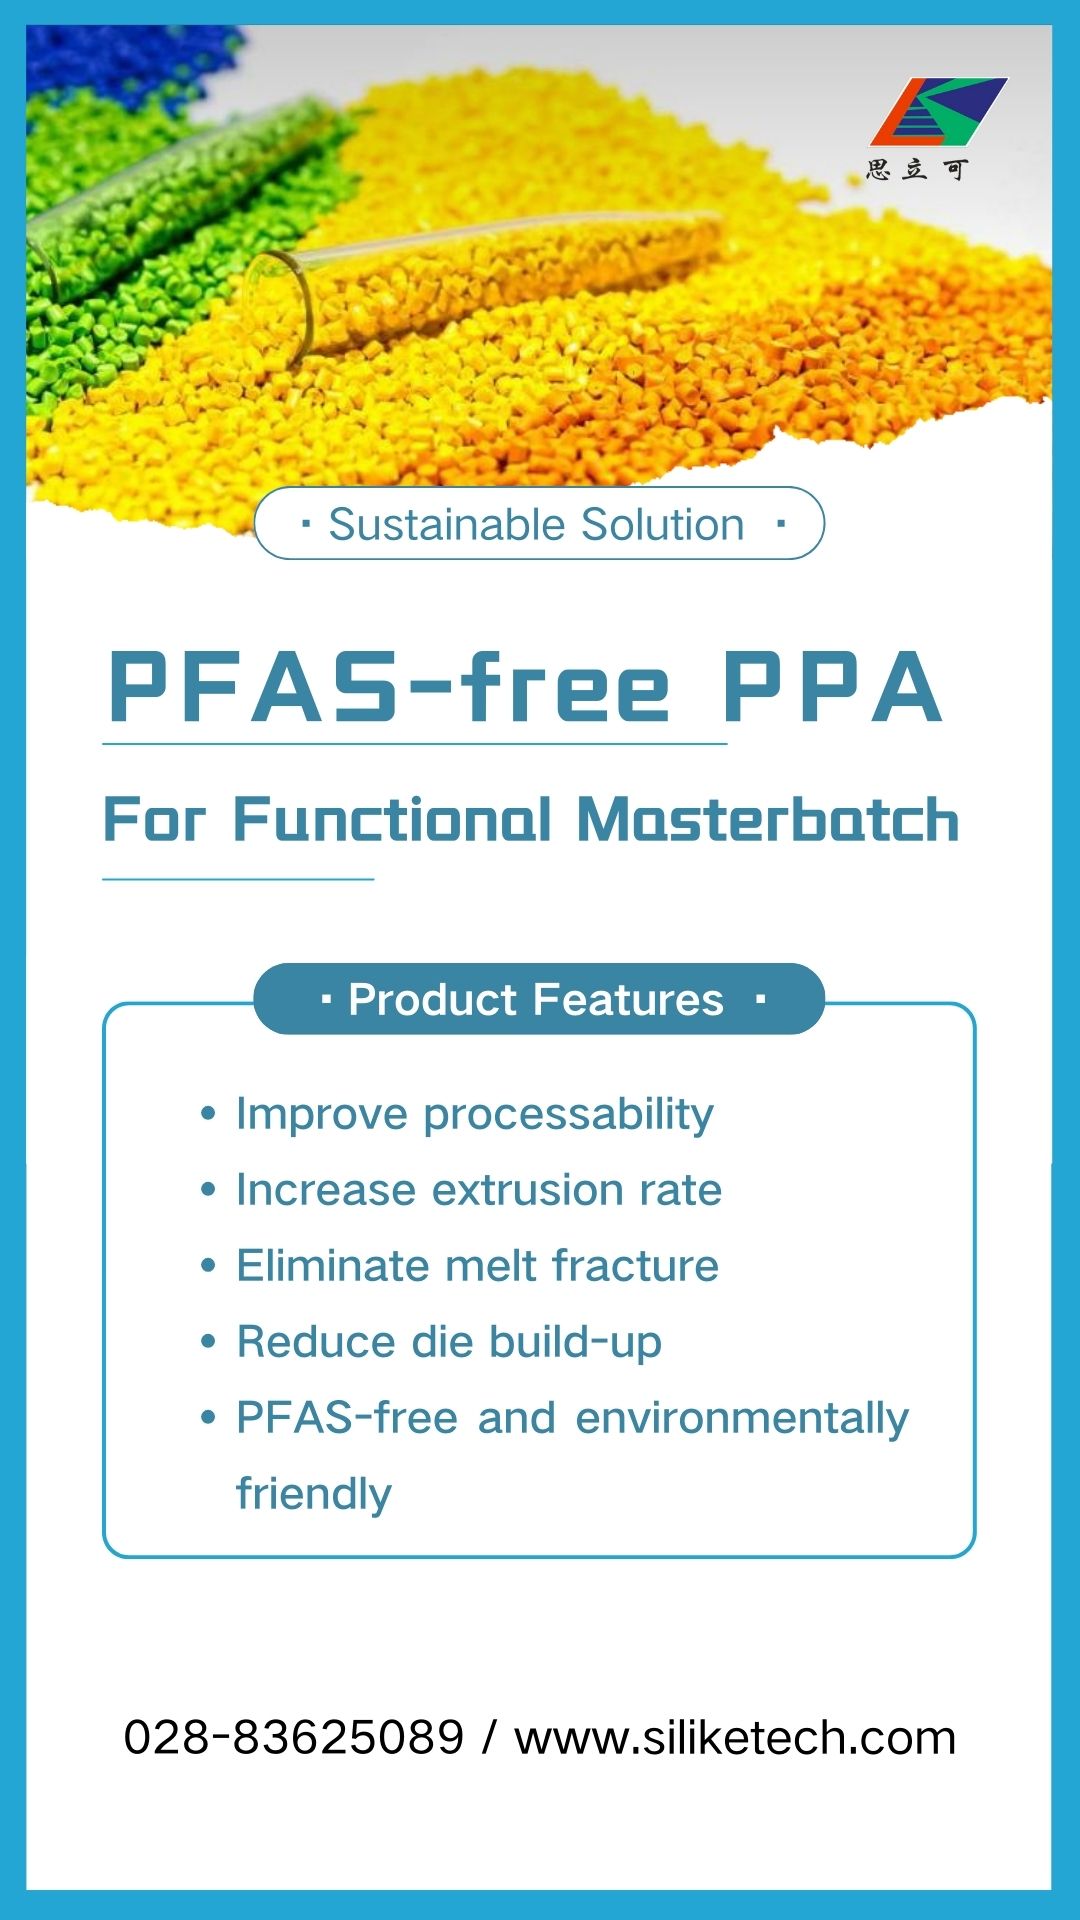 PPA נטול PFAS פותר את הקשיים של עיבוד מאסטראצ' פונקציונלי: הסר שבר נמס, צמצם הצטברות קוביות.